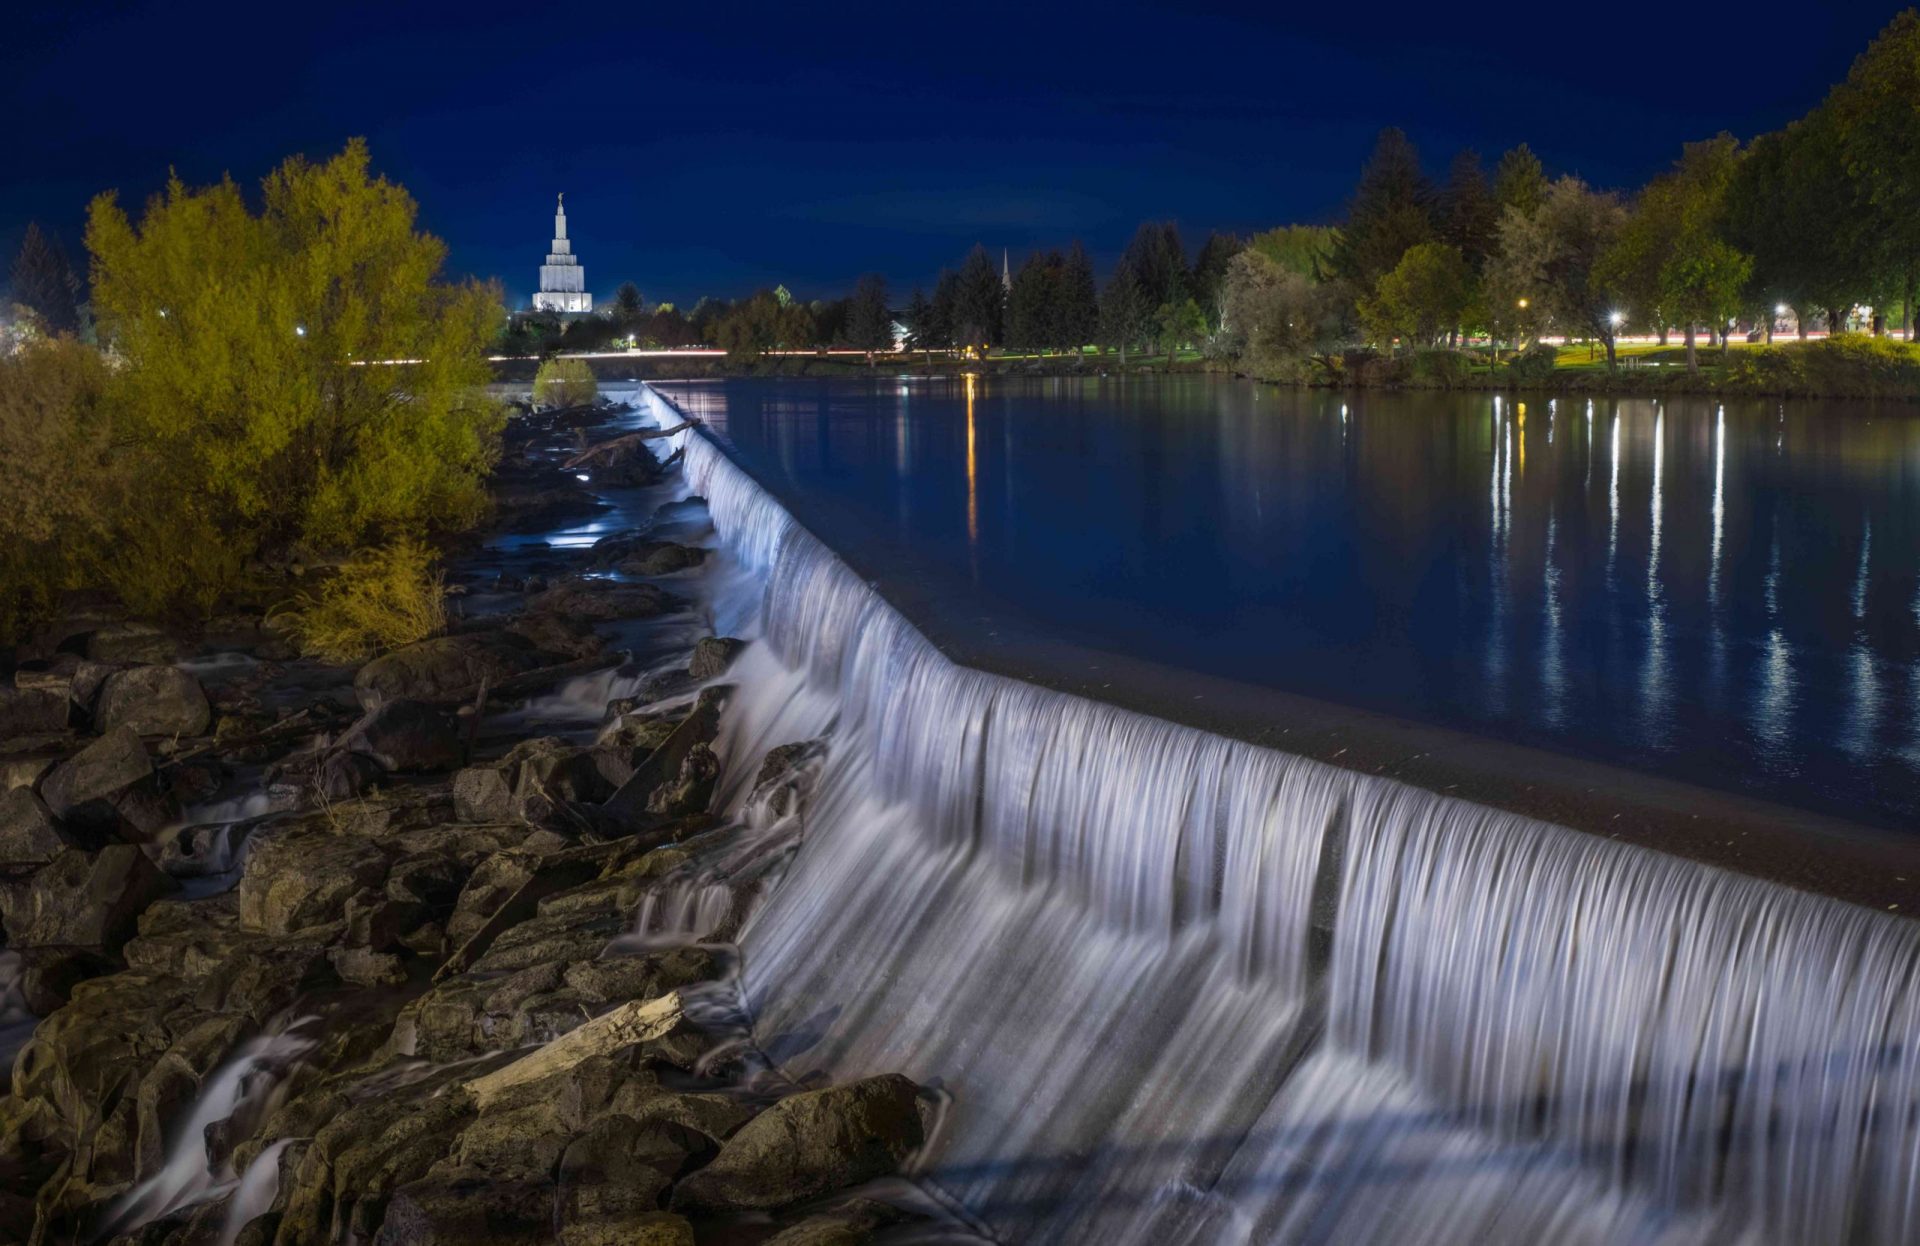 larga cascada de noche, con el agua cayendo desde un estanque azul sobre un lecho de rocas